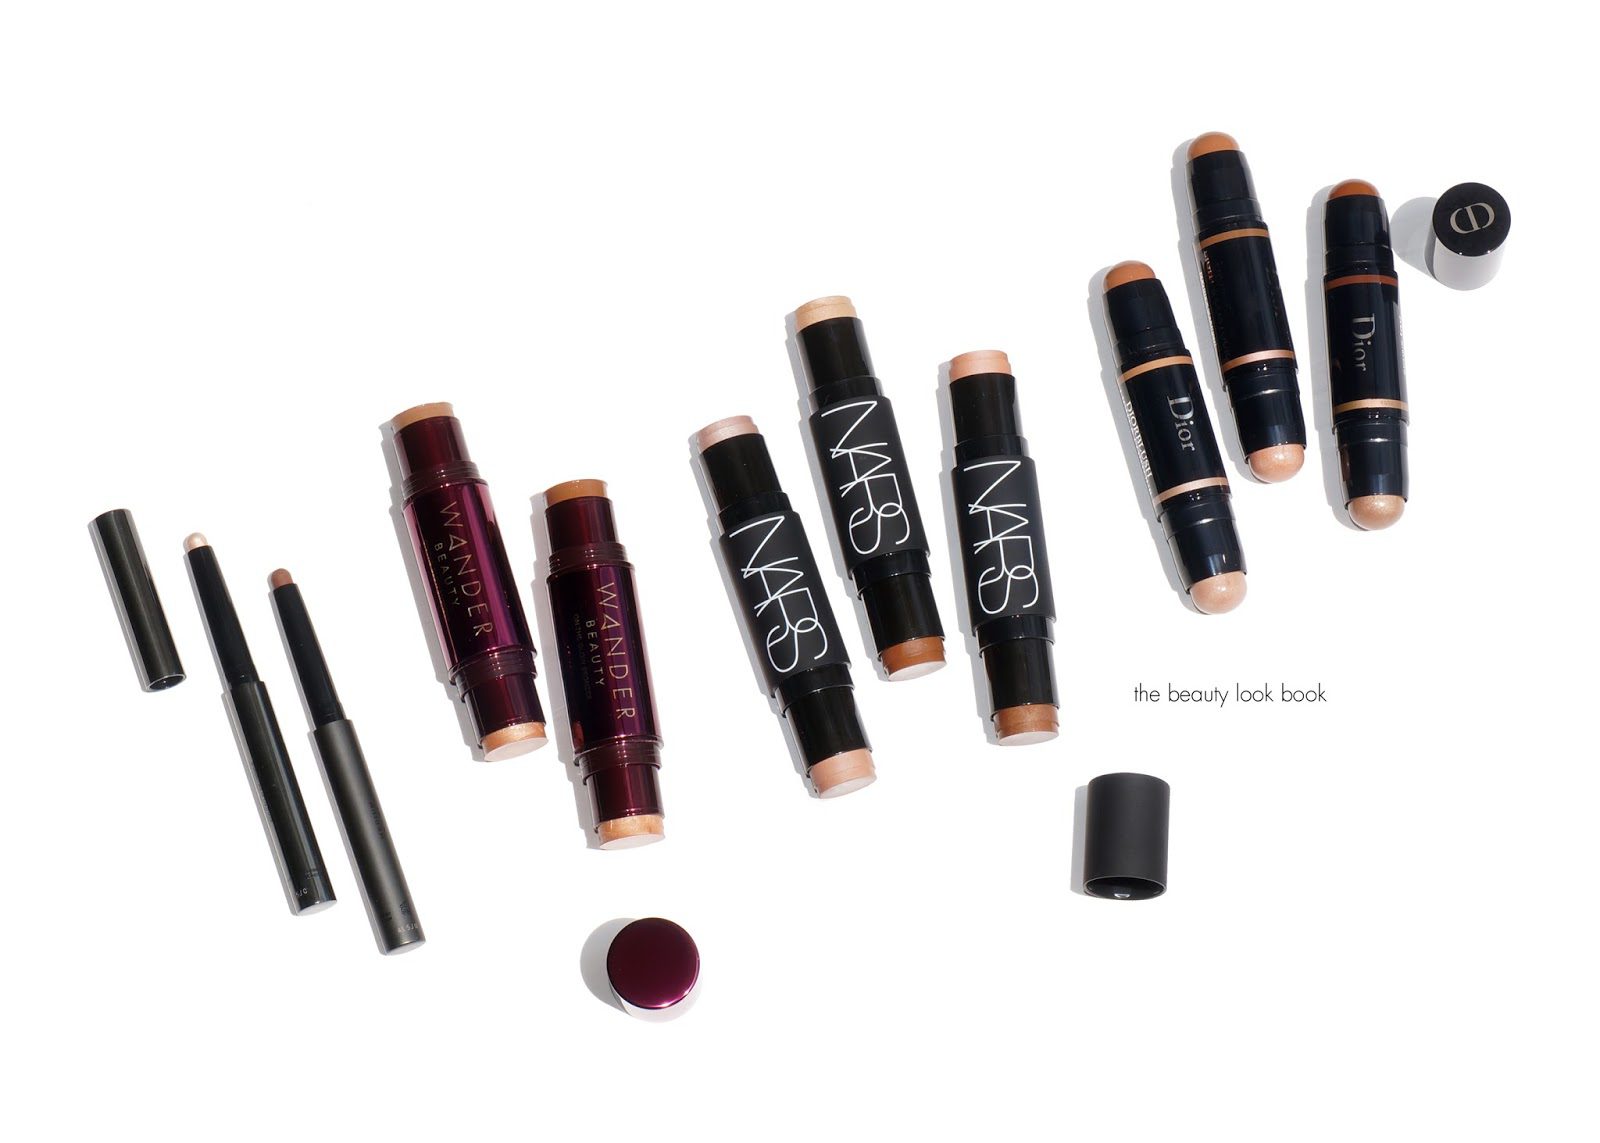 Dior Addict Lipstick + Forever Skin Glow Foundation Reformulations